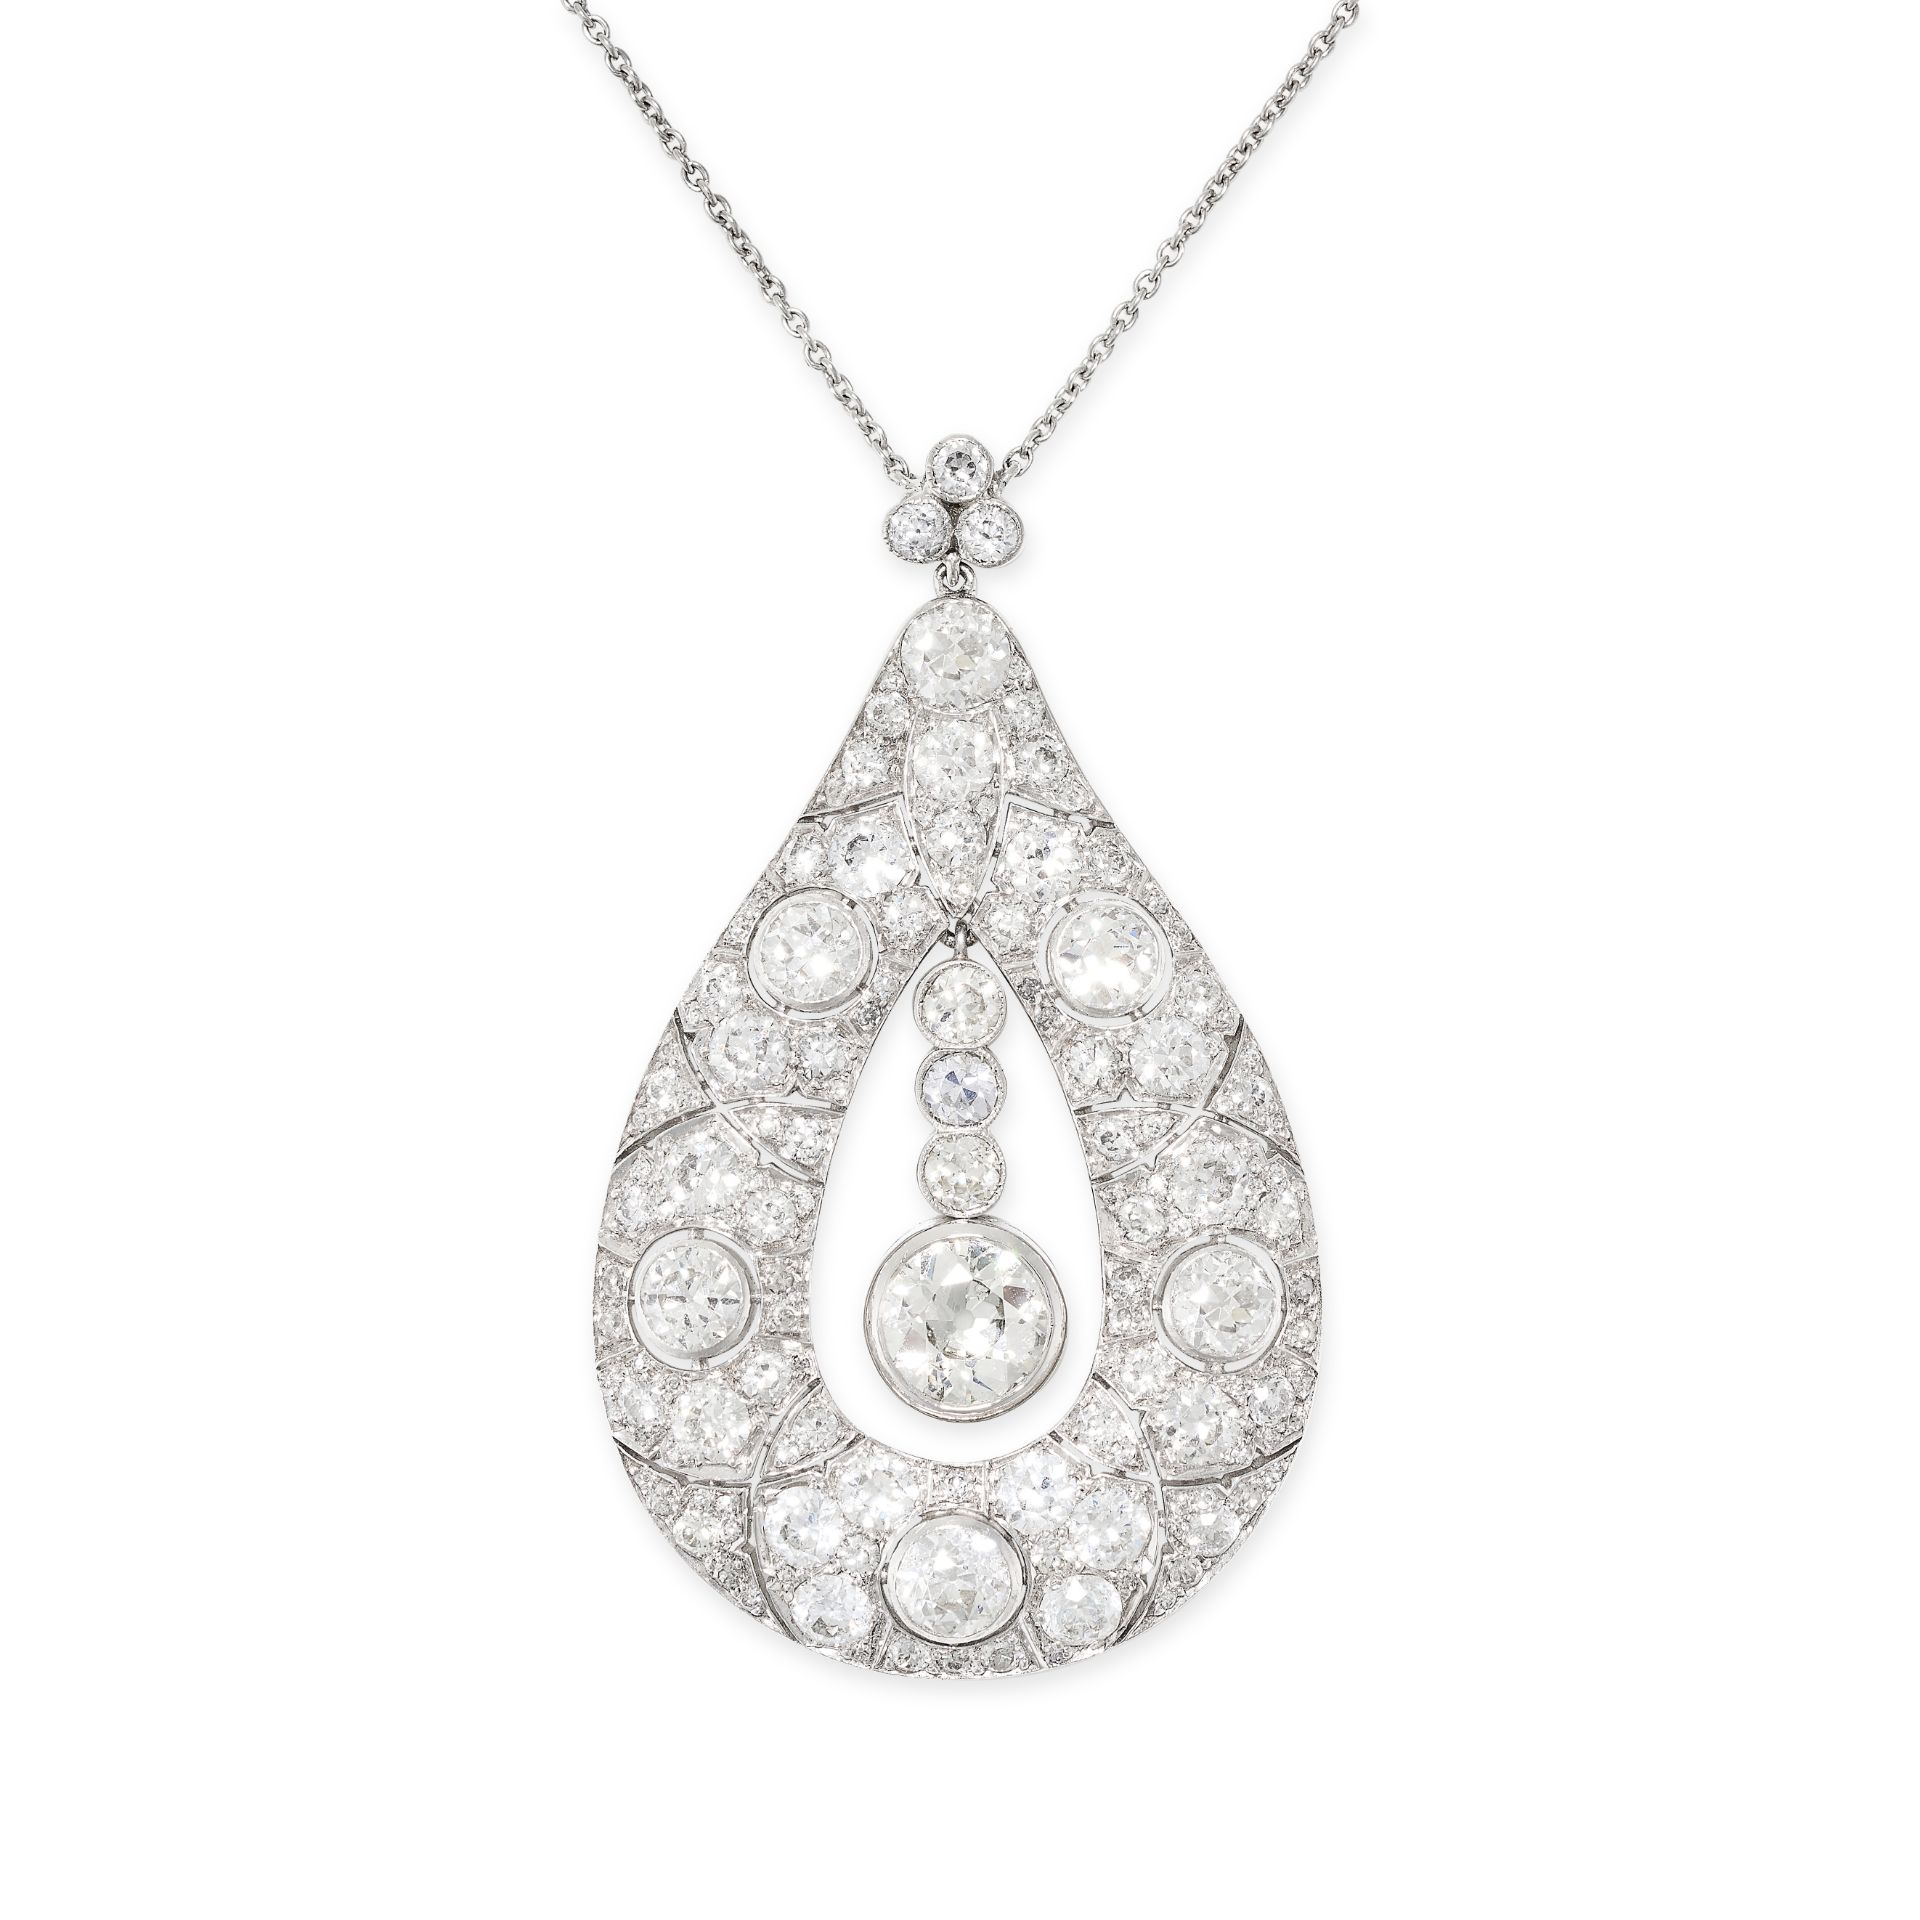 A DIAMOND PENDANT NECKLACE comprising a tear shaped pendant set with old cut diamonds, suspending